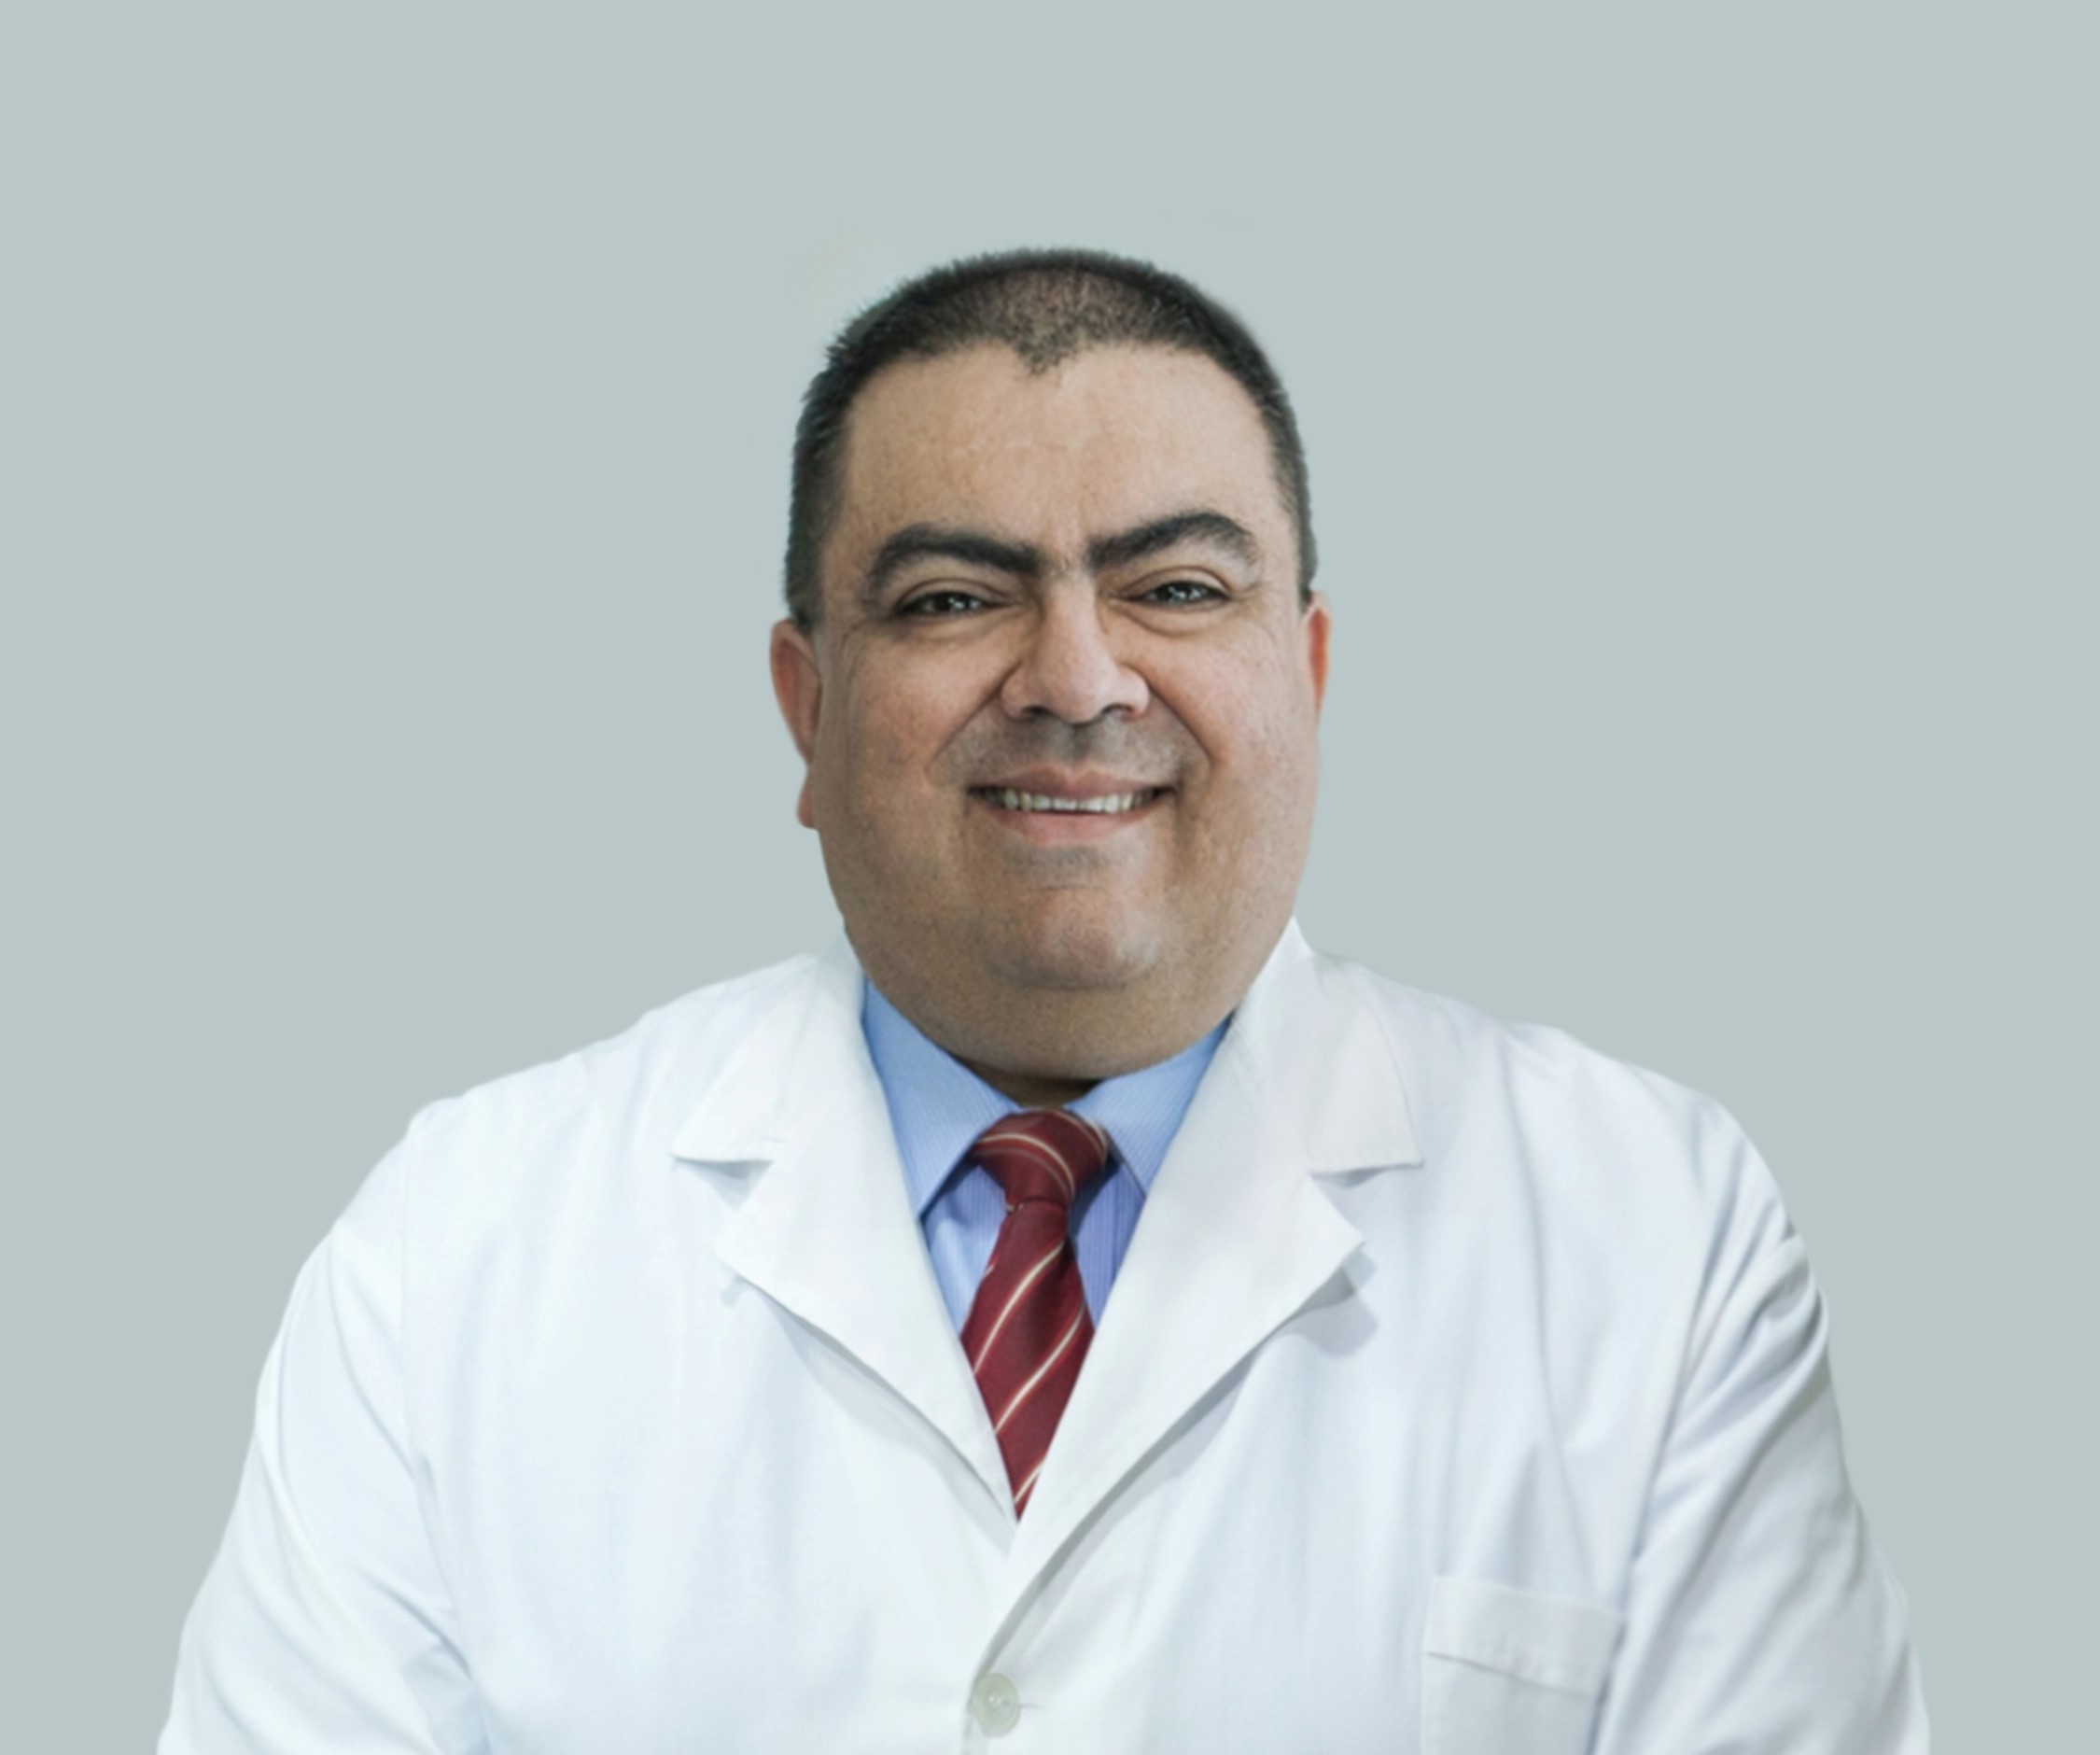 Dr. Solon Serpa Frías oftalmologos oftalmologia Oftalmologo Oftalmólogo